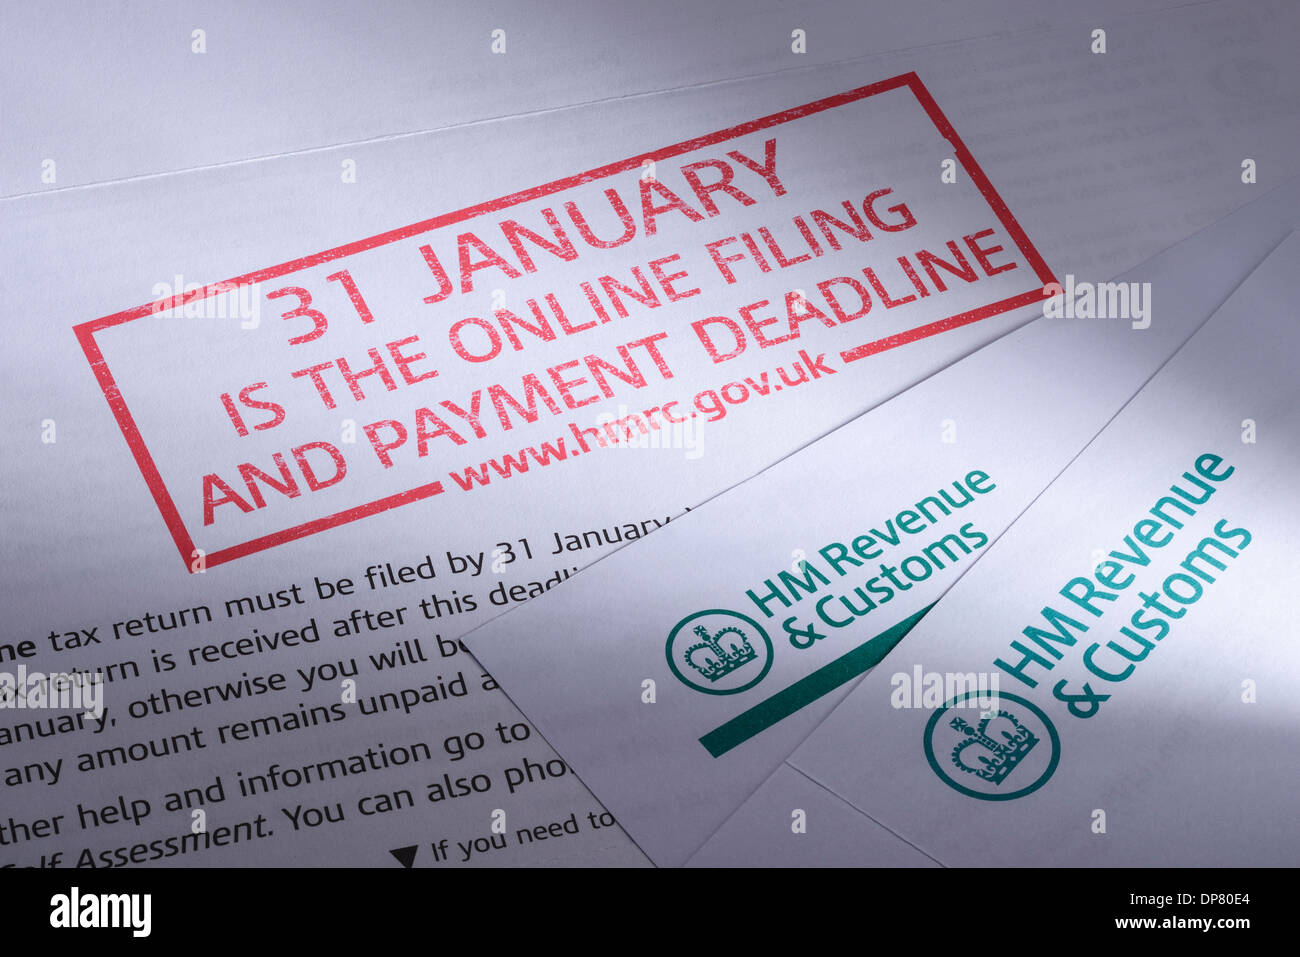 HMRC Self Assessment online filing deadline paperwork Stock Photo